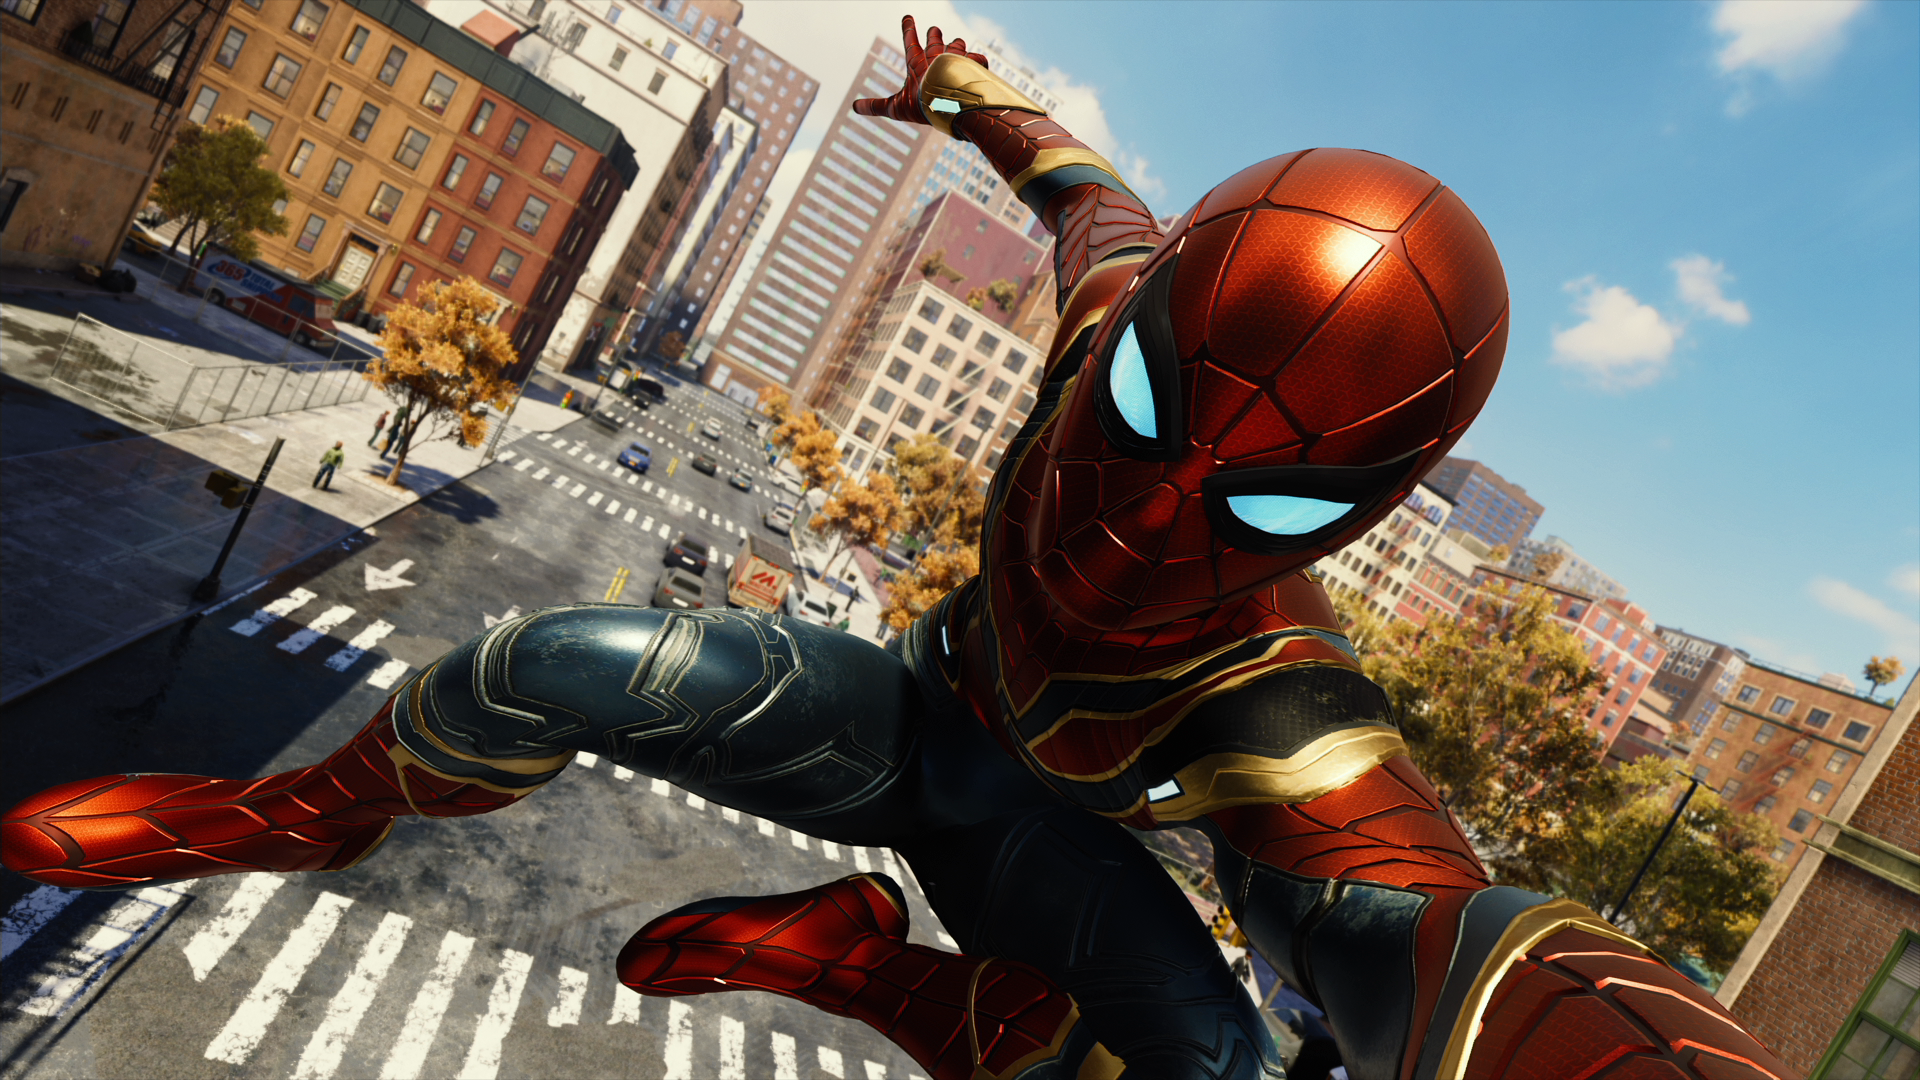 Marvel's Spider-Man Remasterizado já está disponível para PC